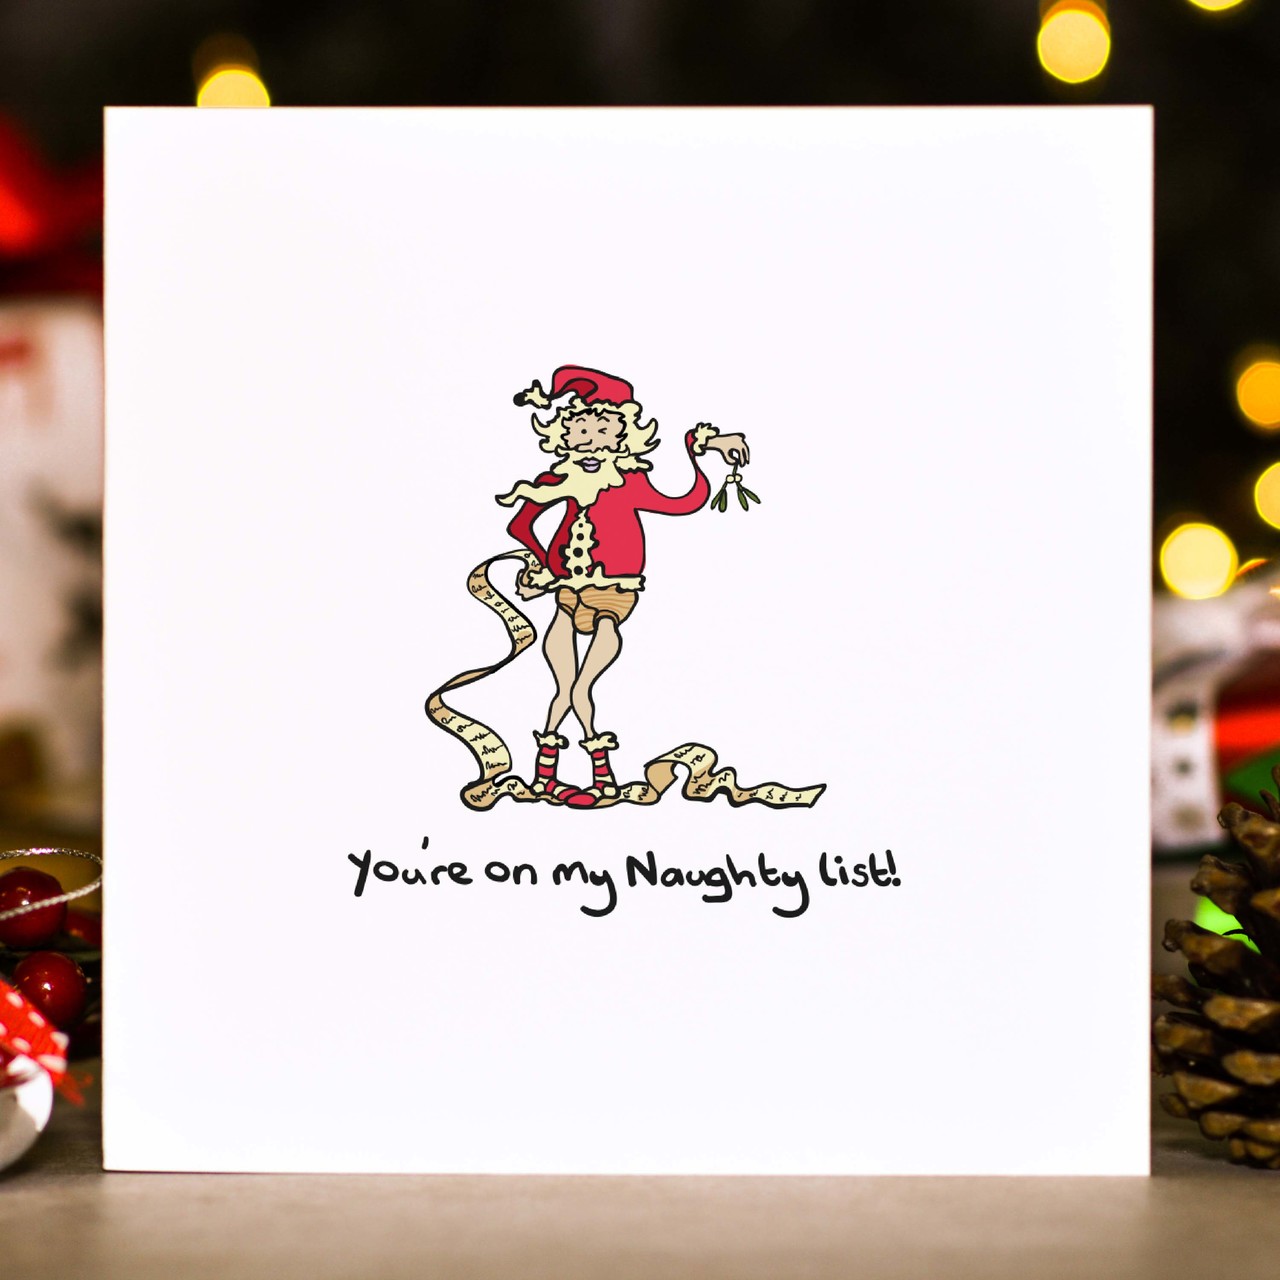 You’re on my naughty list! Christmas Card